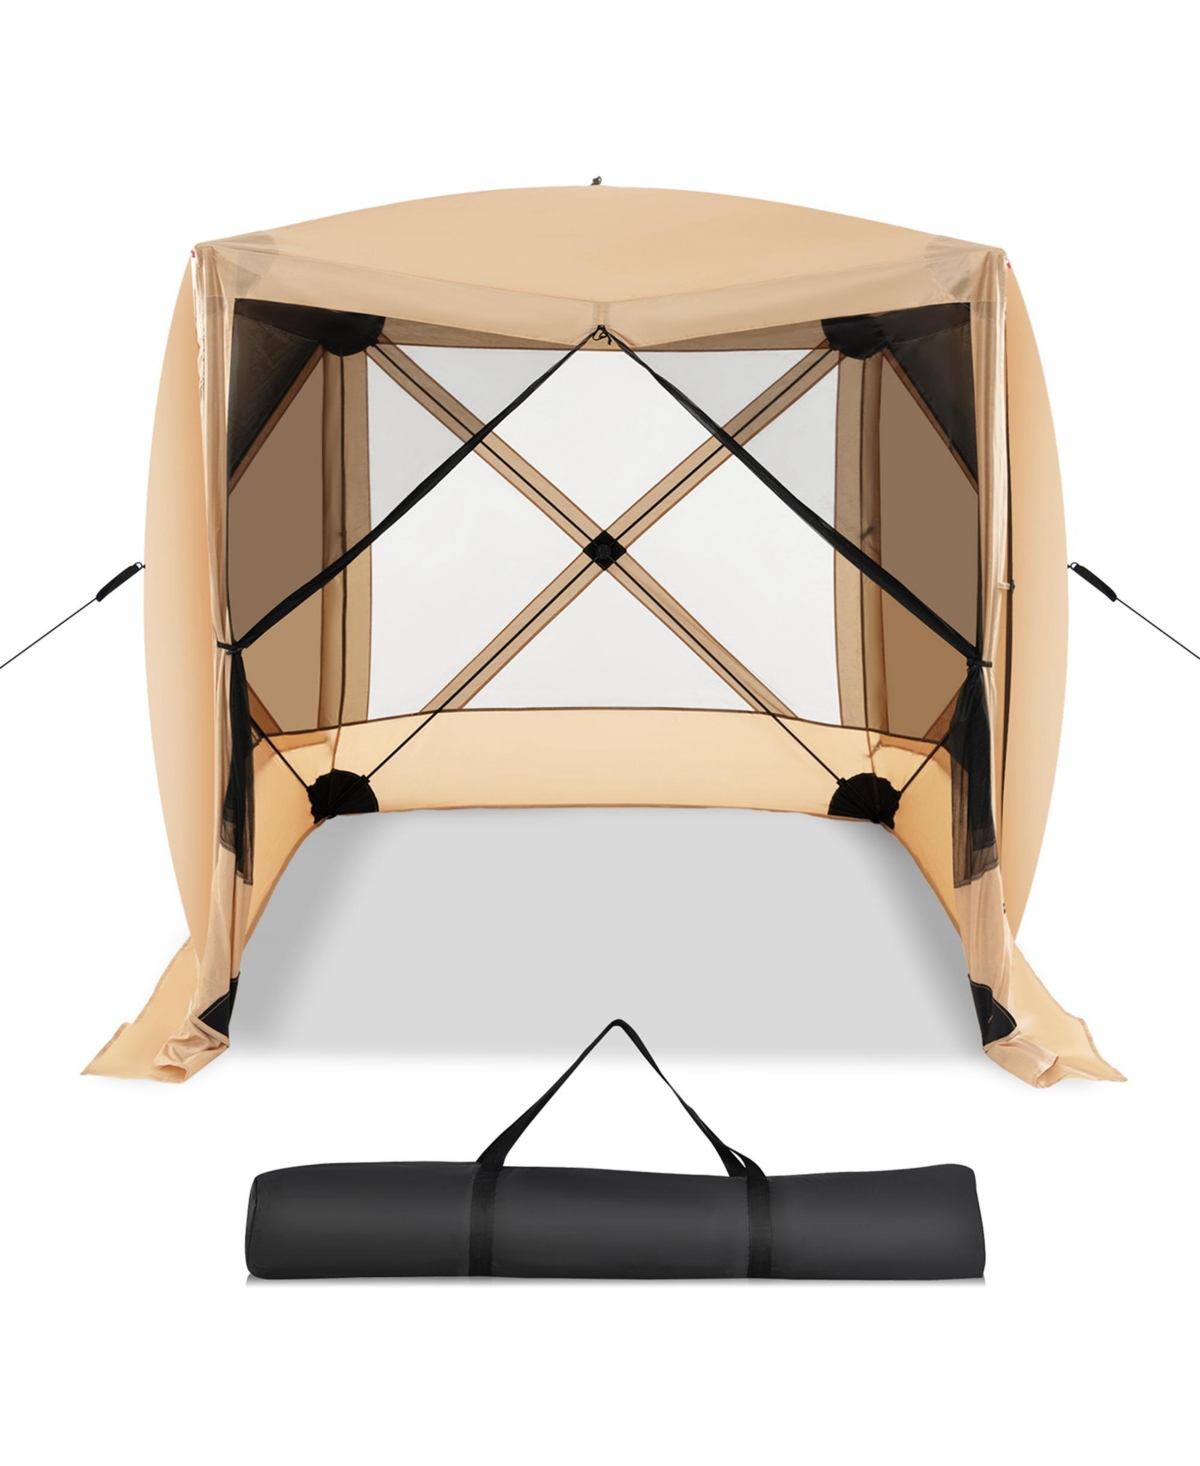 6.7 Ft x 6.7 Ft 4-Panel Pop up Camping Gazebo Quick-Set with 2 Sunshade Cloths - Beige/khaki